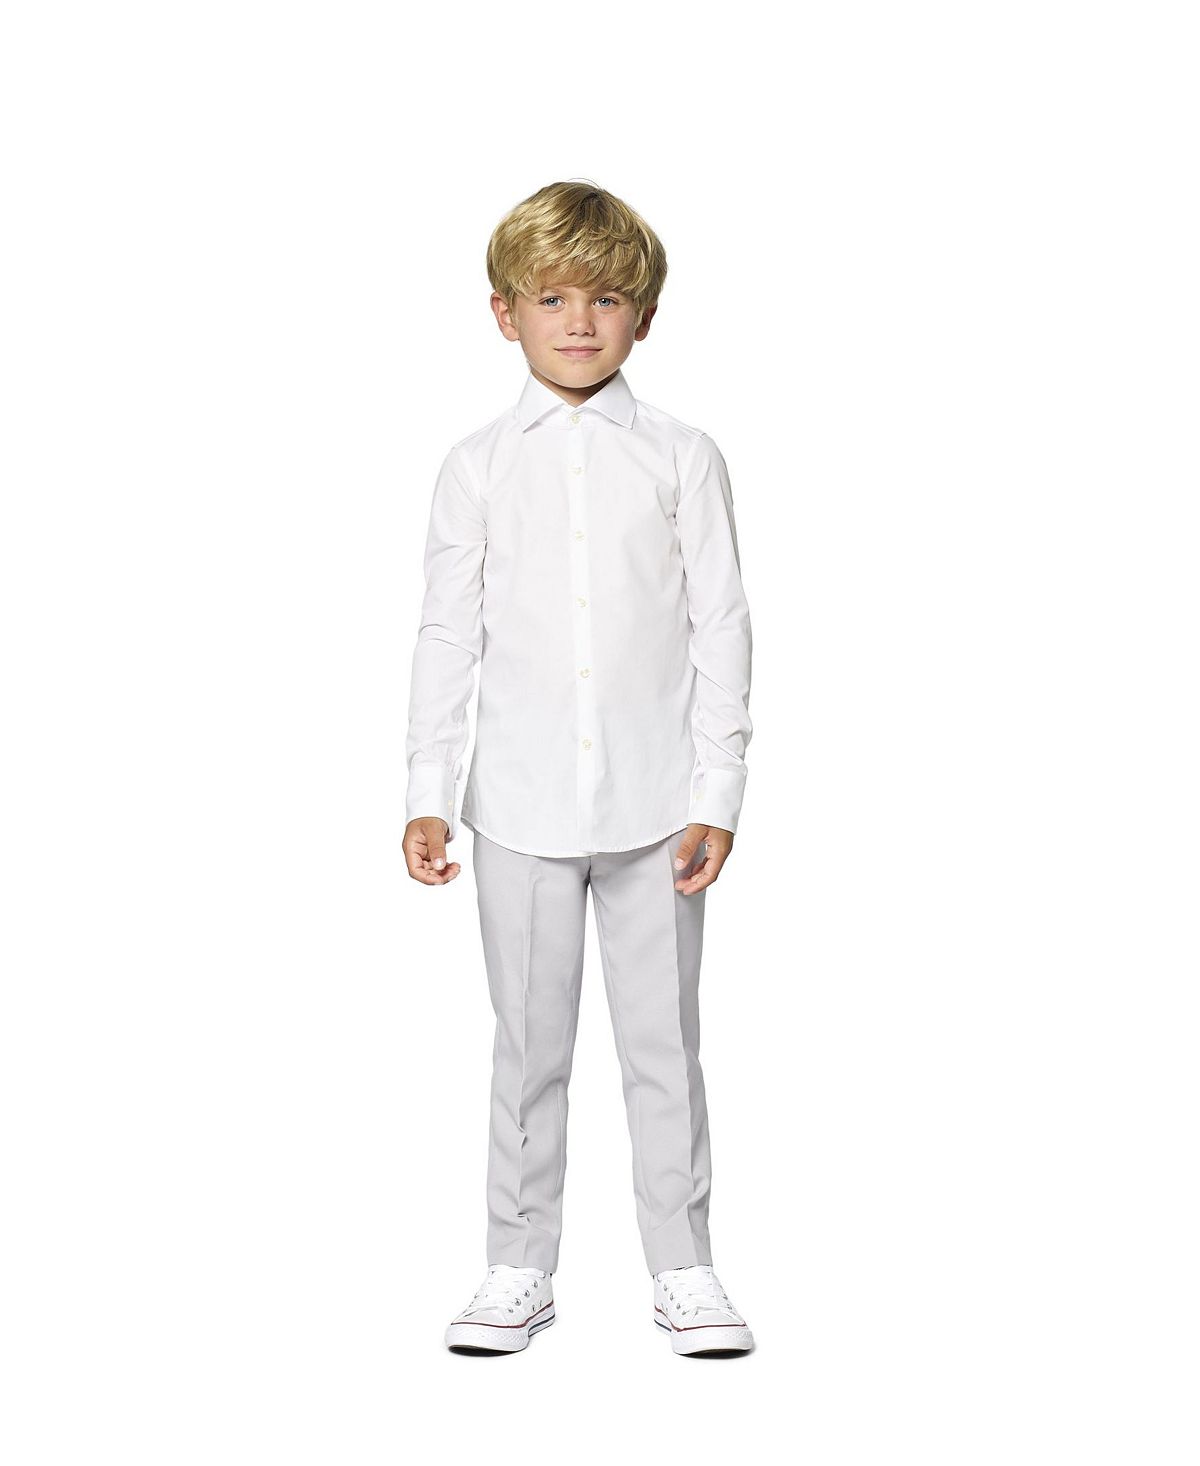 классическая рубашка solid color opposuits цвет white knight Однотонная рубашка Knight для мальчиков для малышей OppoSuits